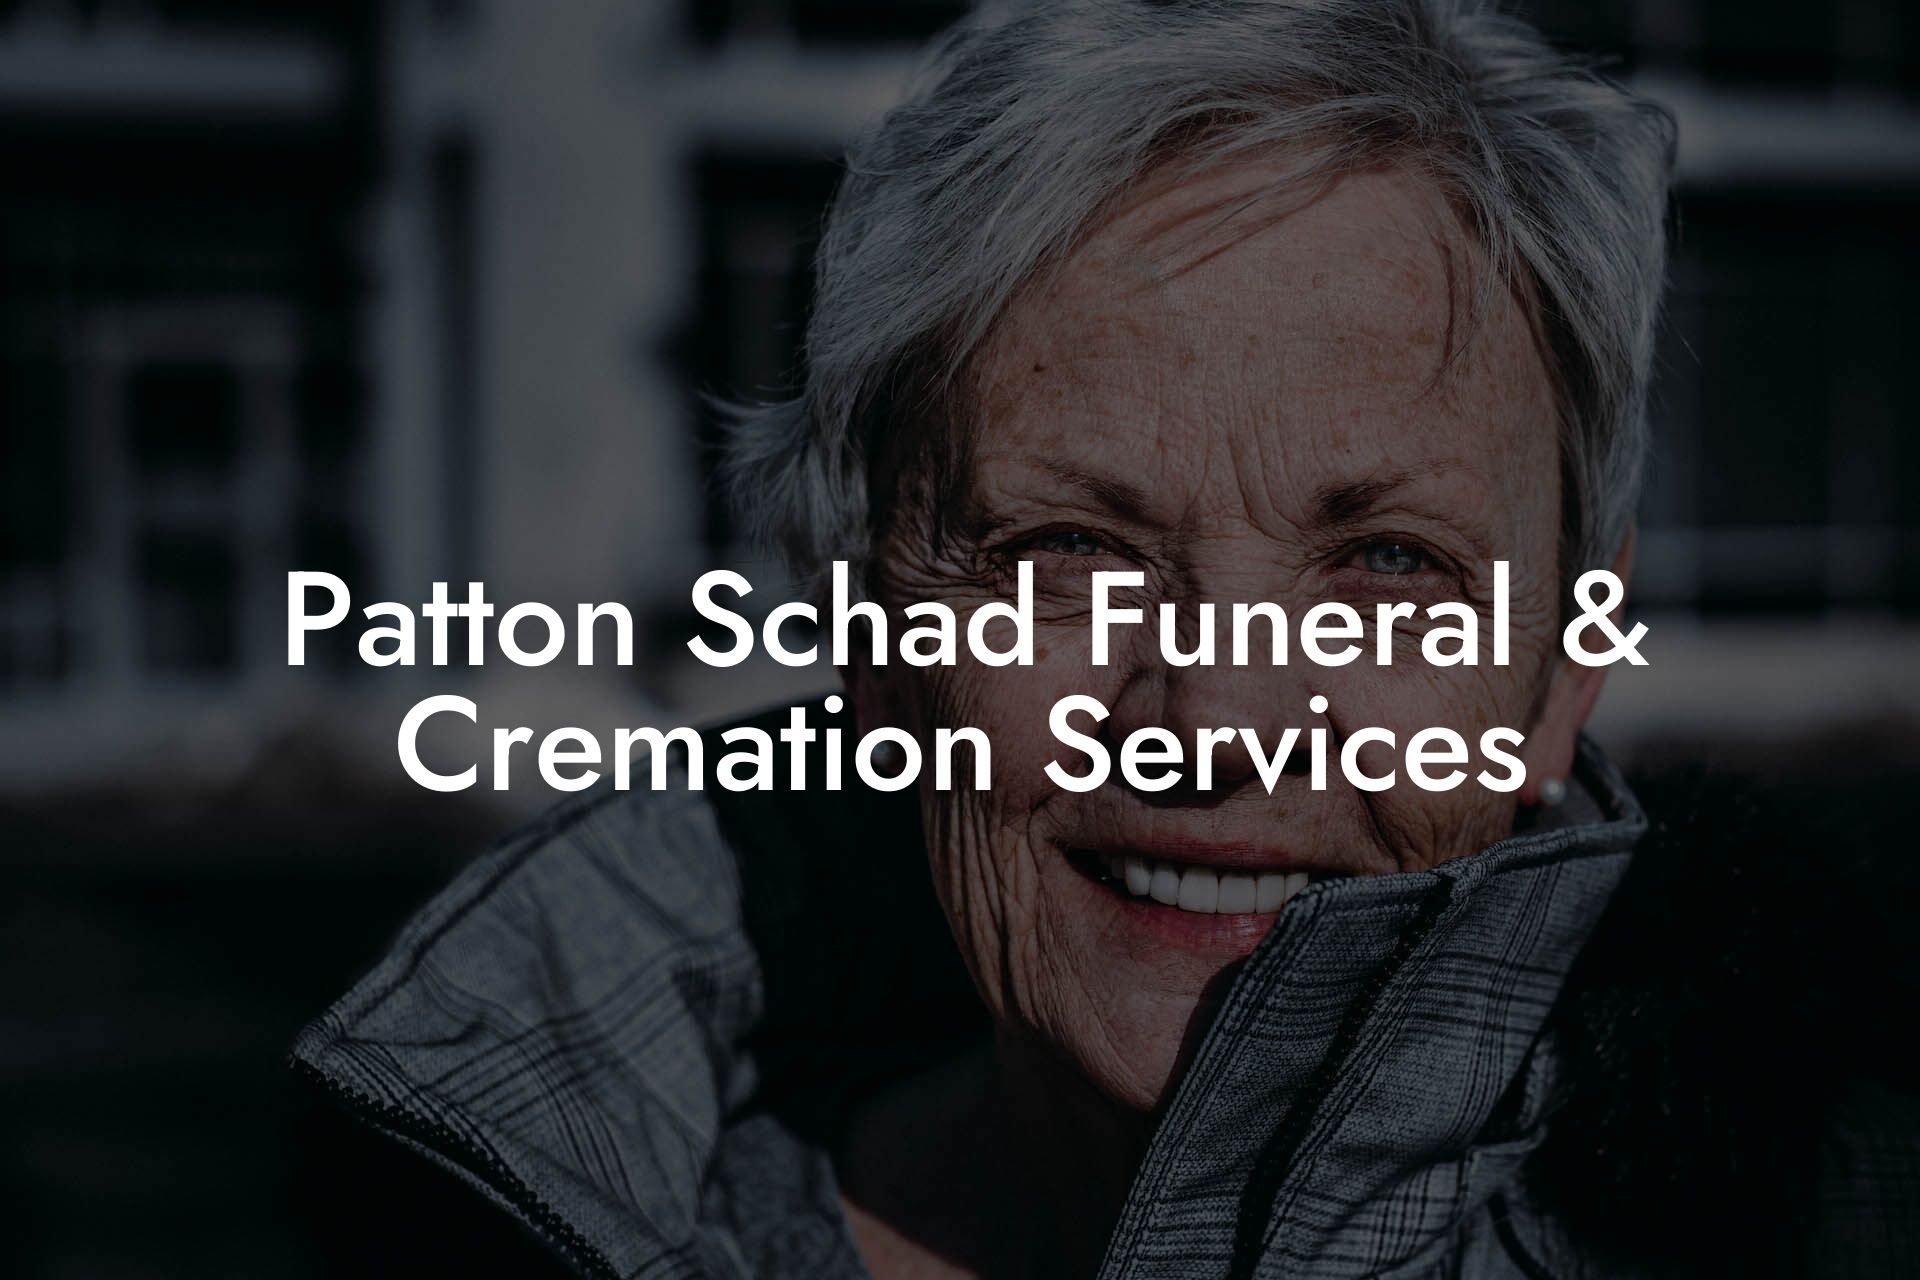 Patton Schad Funeral & Cremation Services